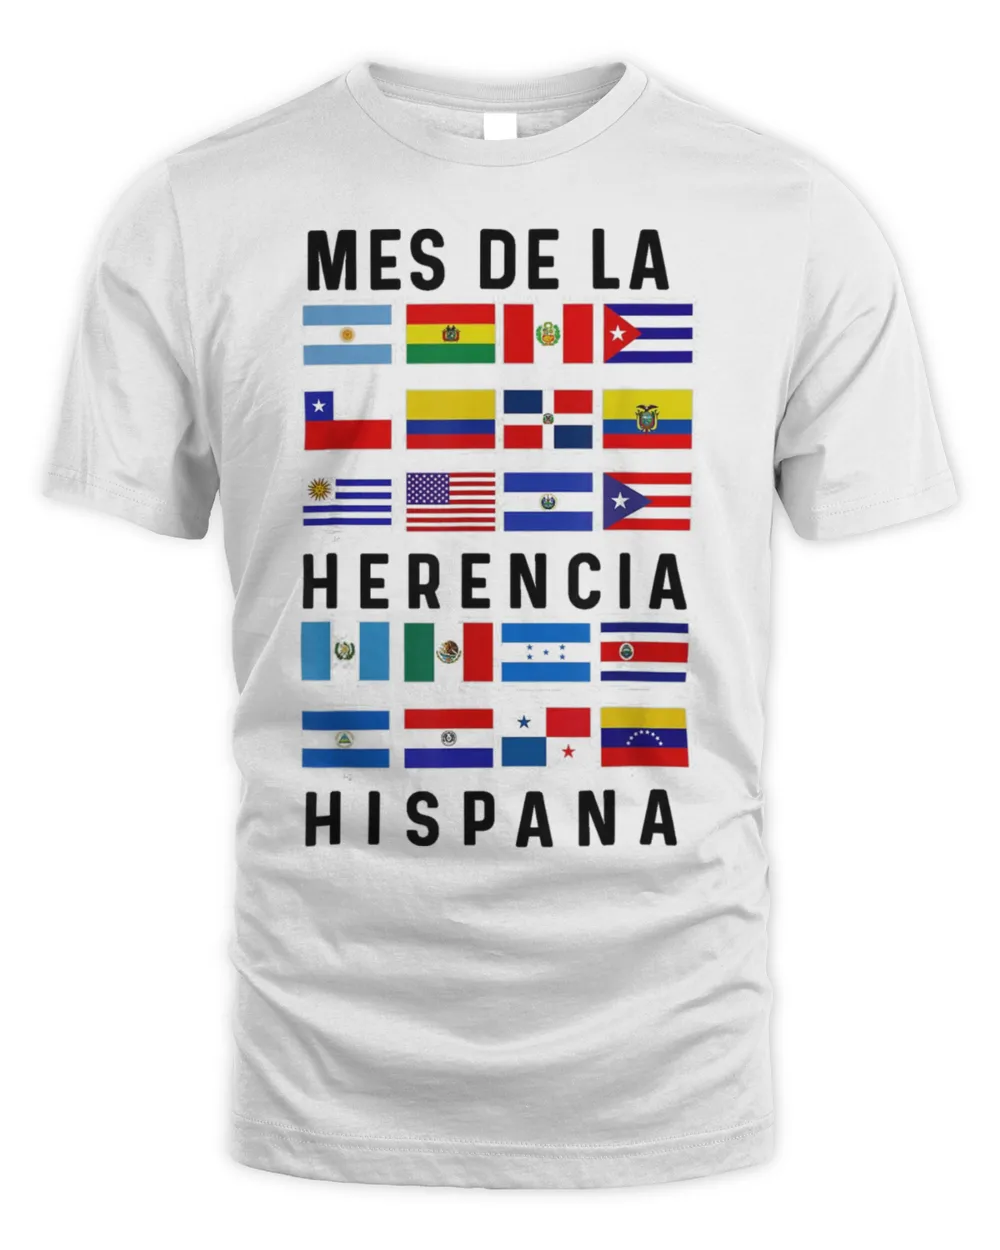 Mes de la Herencia Hispana Camiseta Latino Pride Flags Shirt